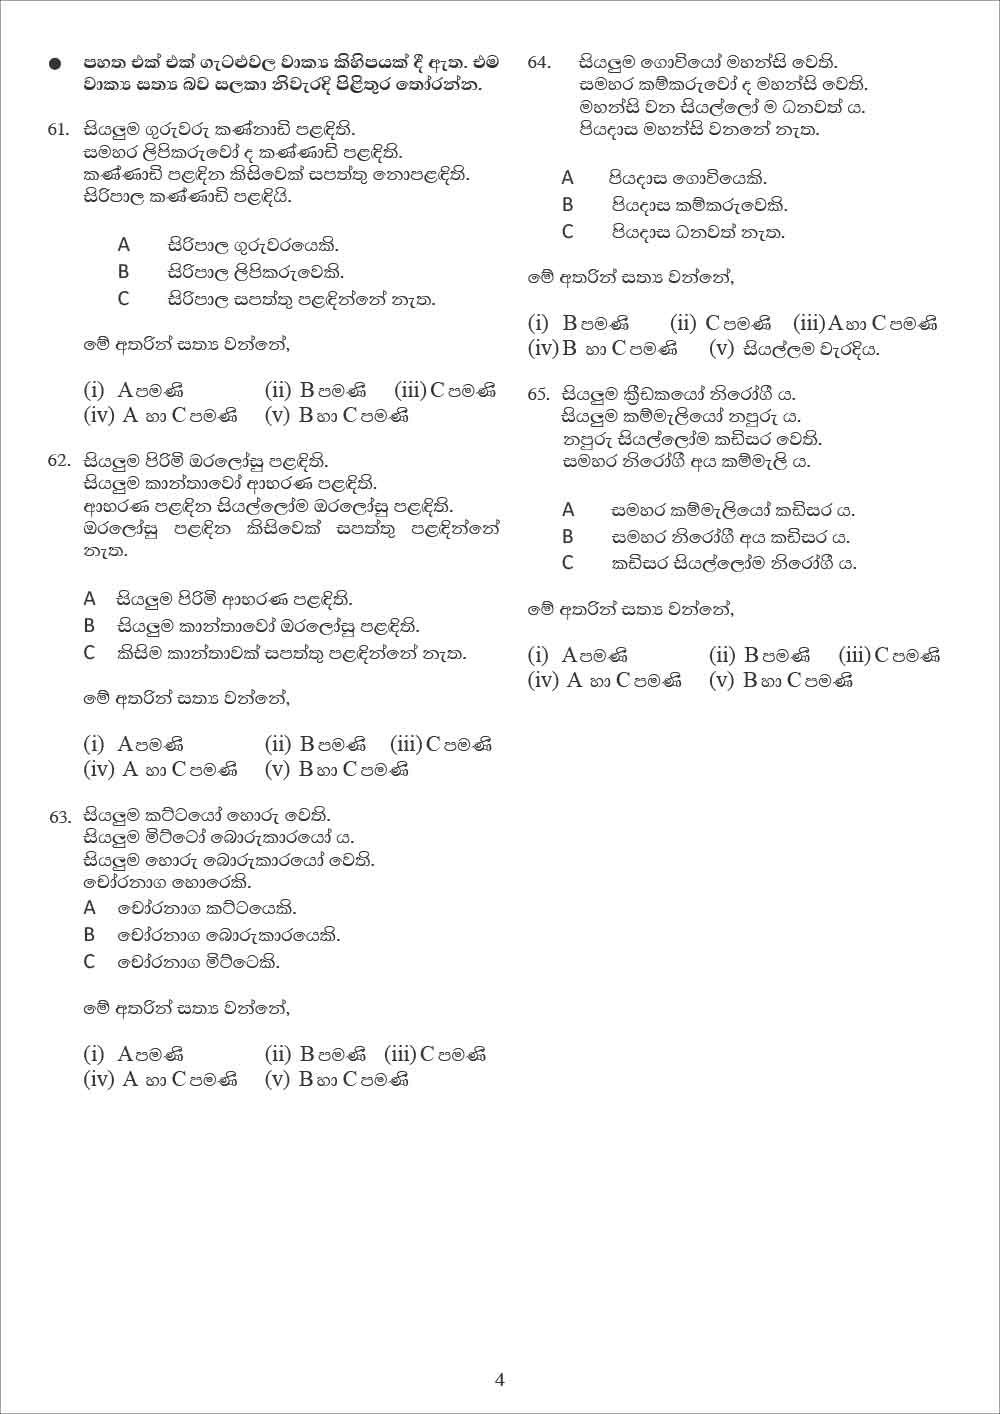 SLAS Pass Paper 06 by Anusha Gokula - General Knowledge in Sinhala 